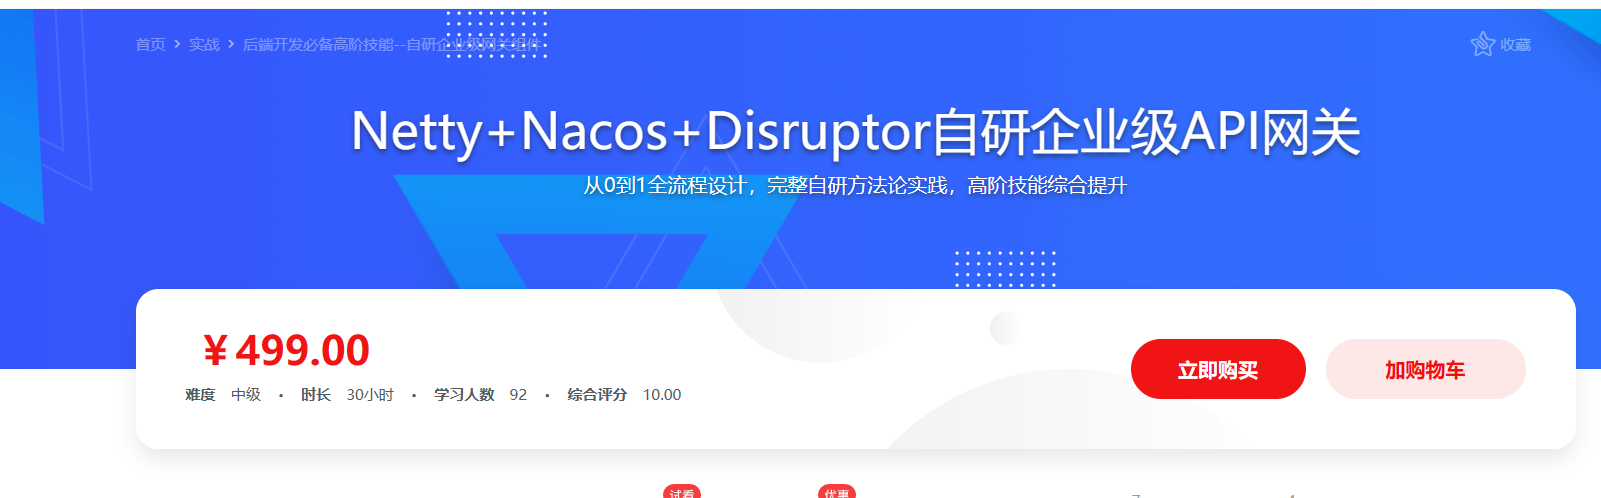 求资源 Netty+Nacos+Disruptor自研企业级API网关